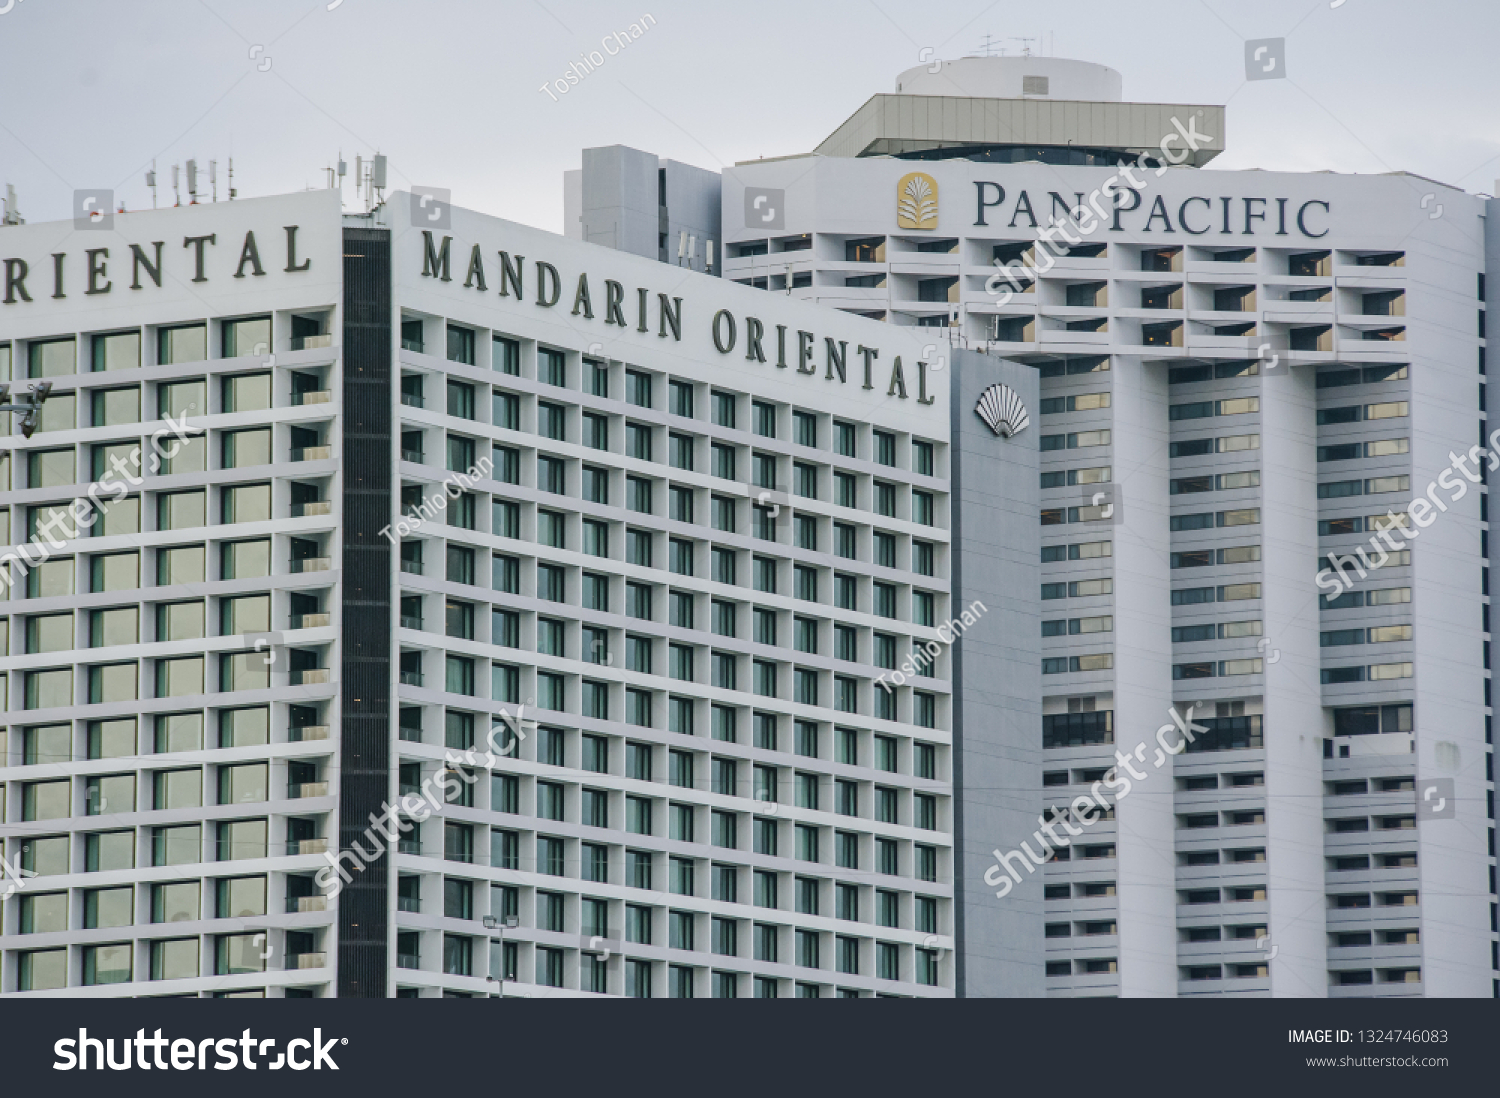 Hotel mandarin pacific